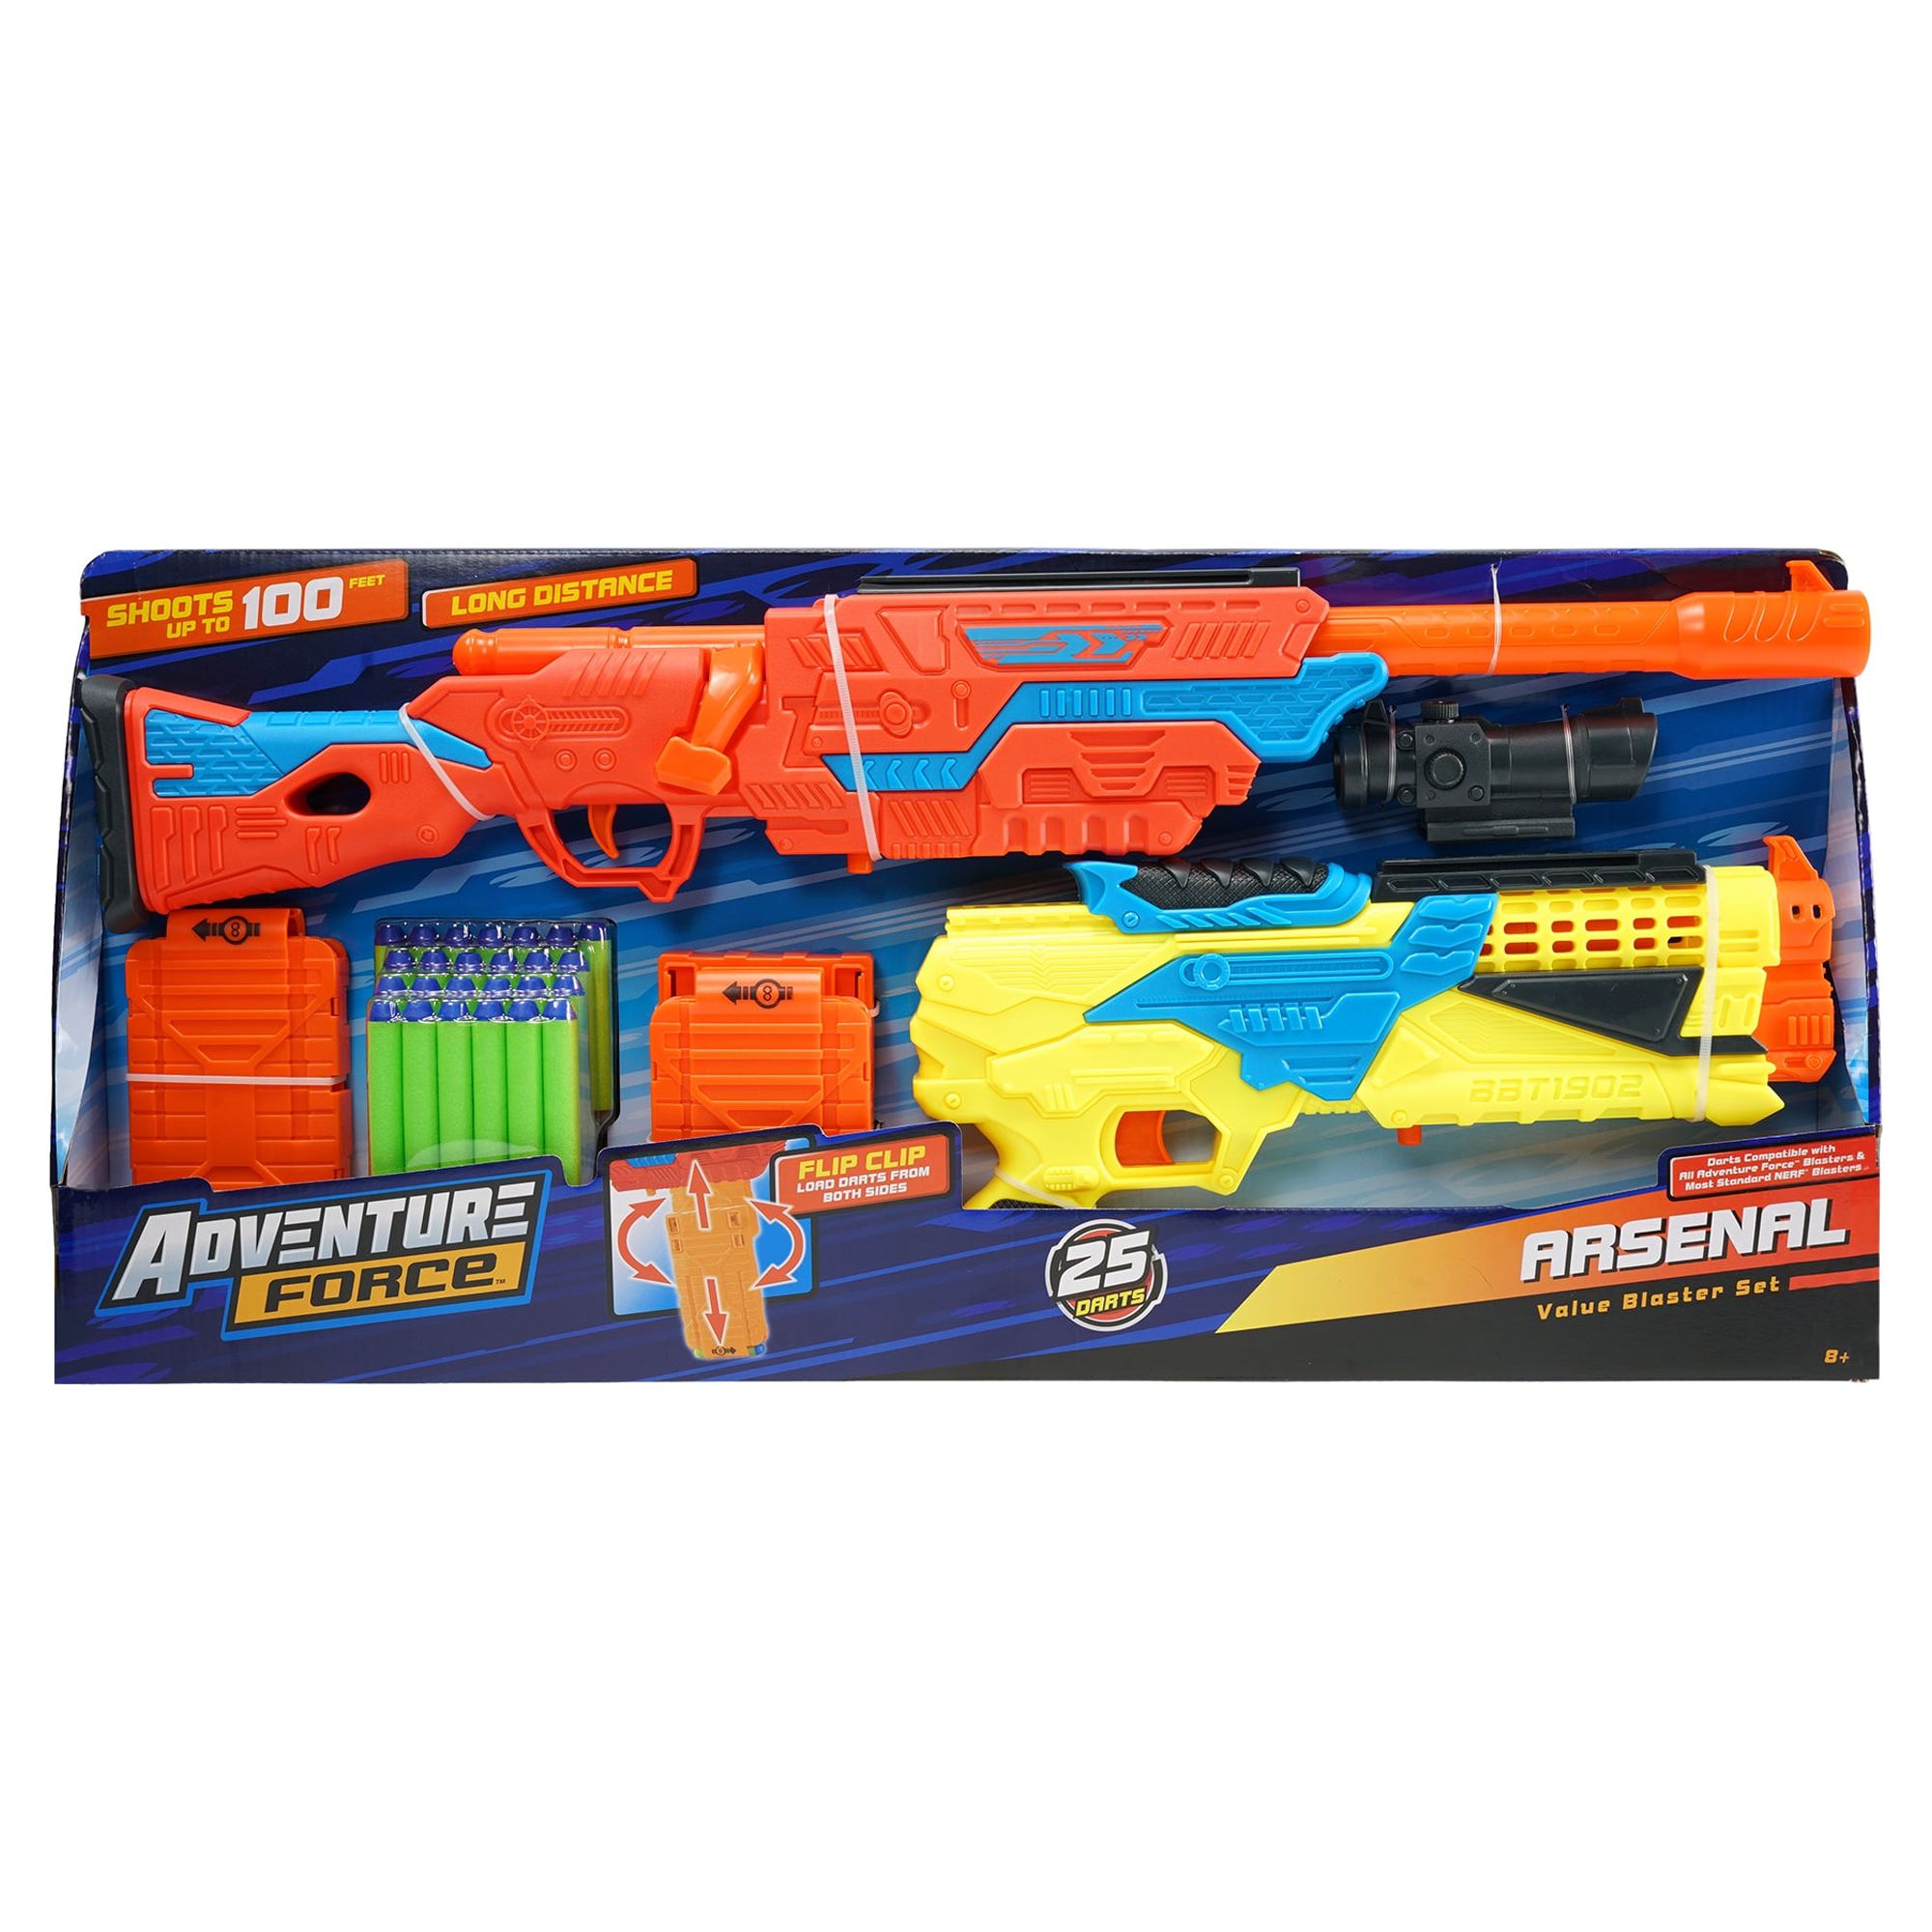 Adventure Force Arsenal Blaster Bundle - image 4 of 11